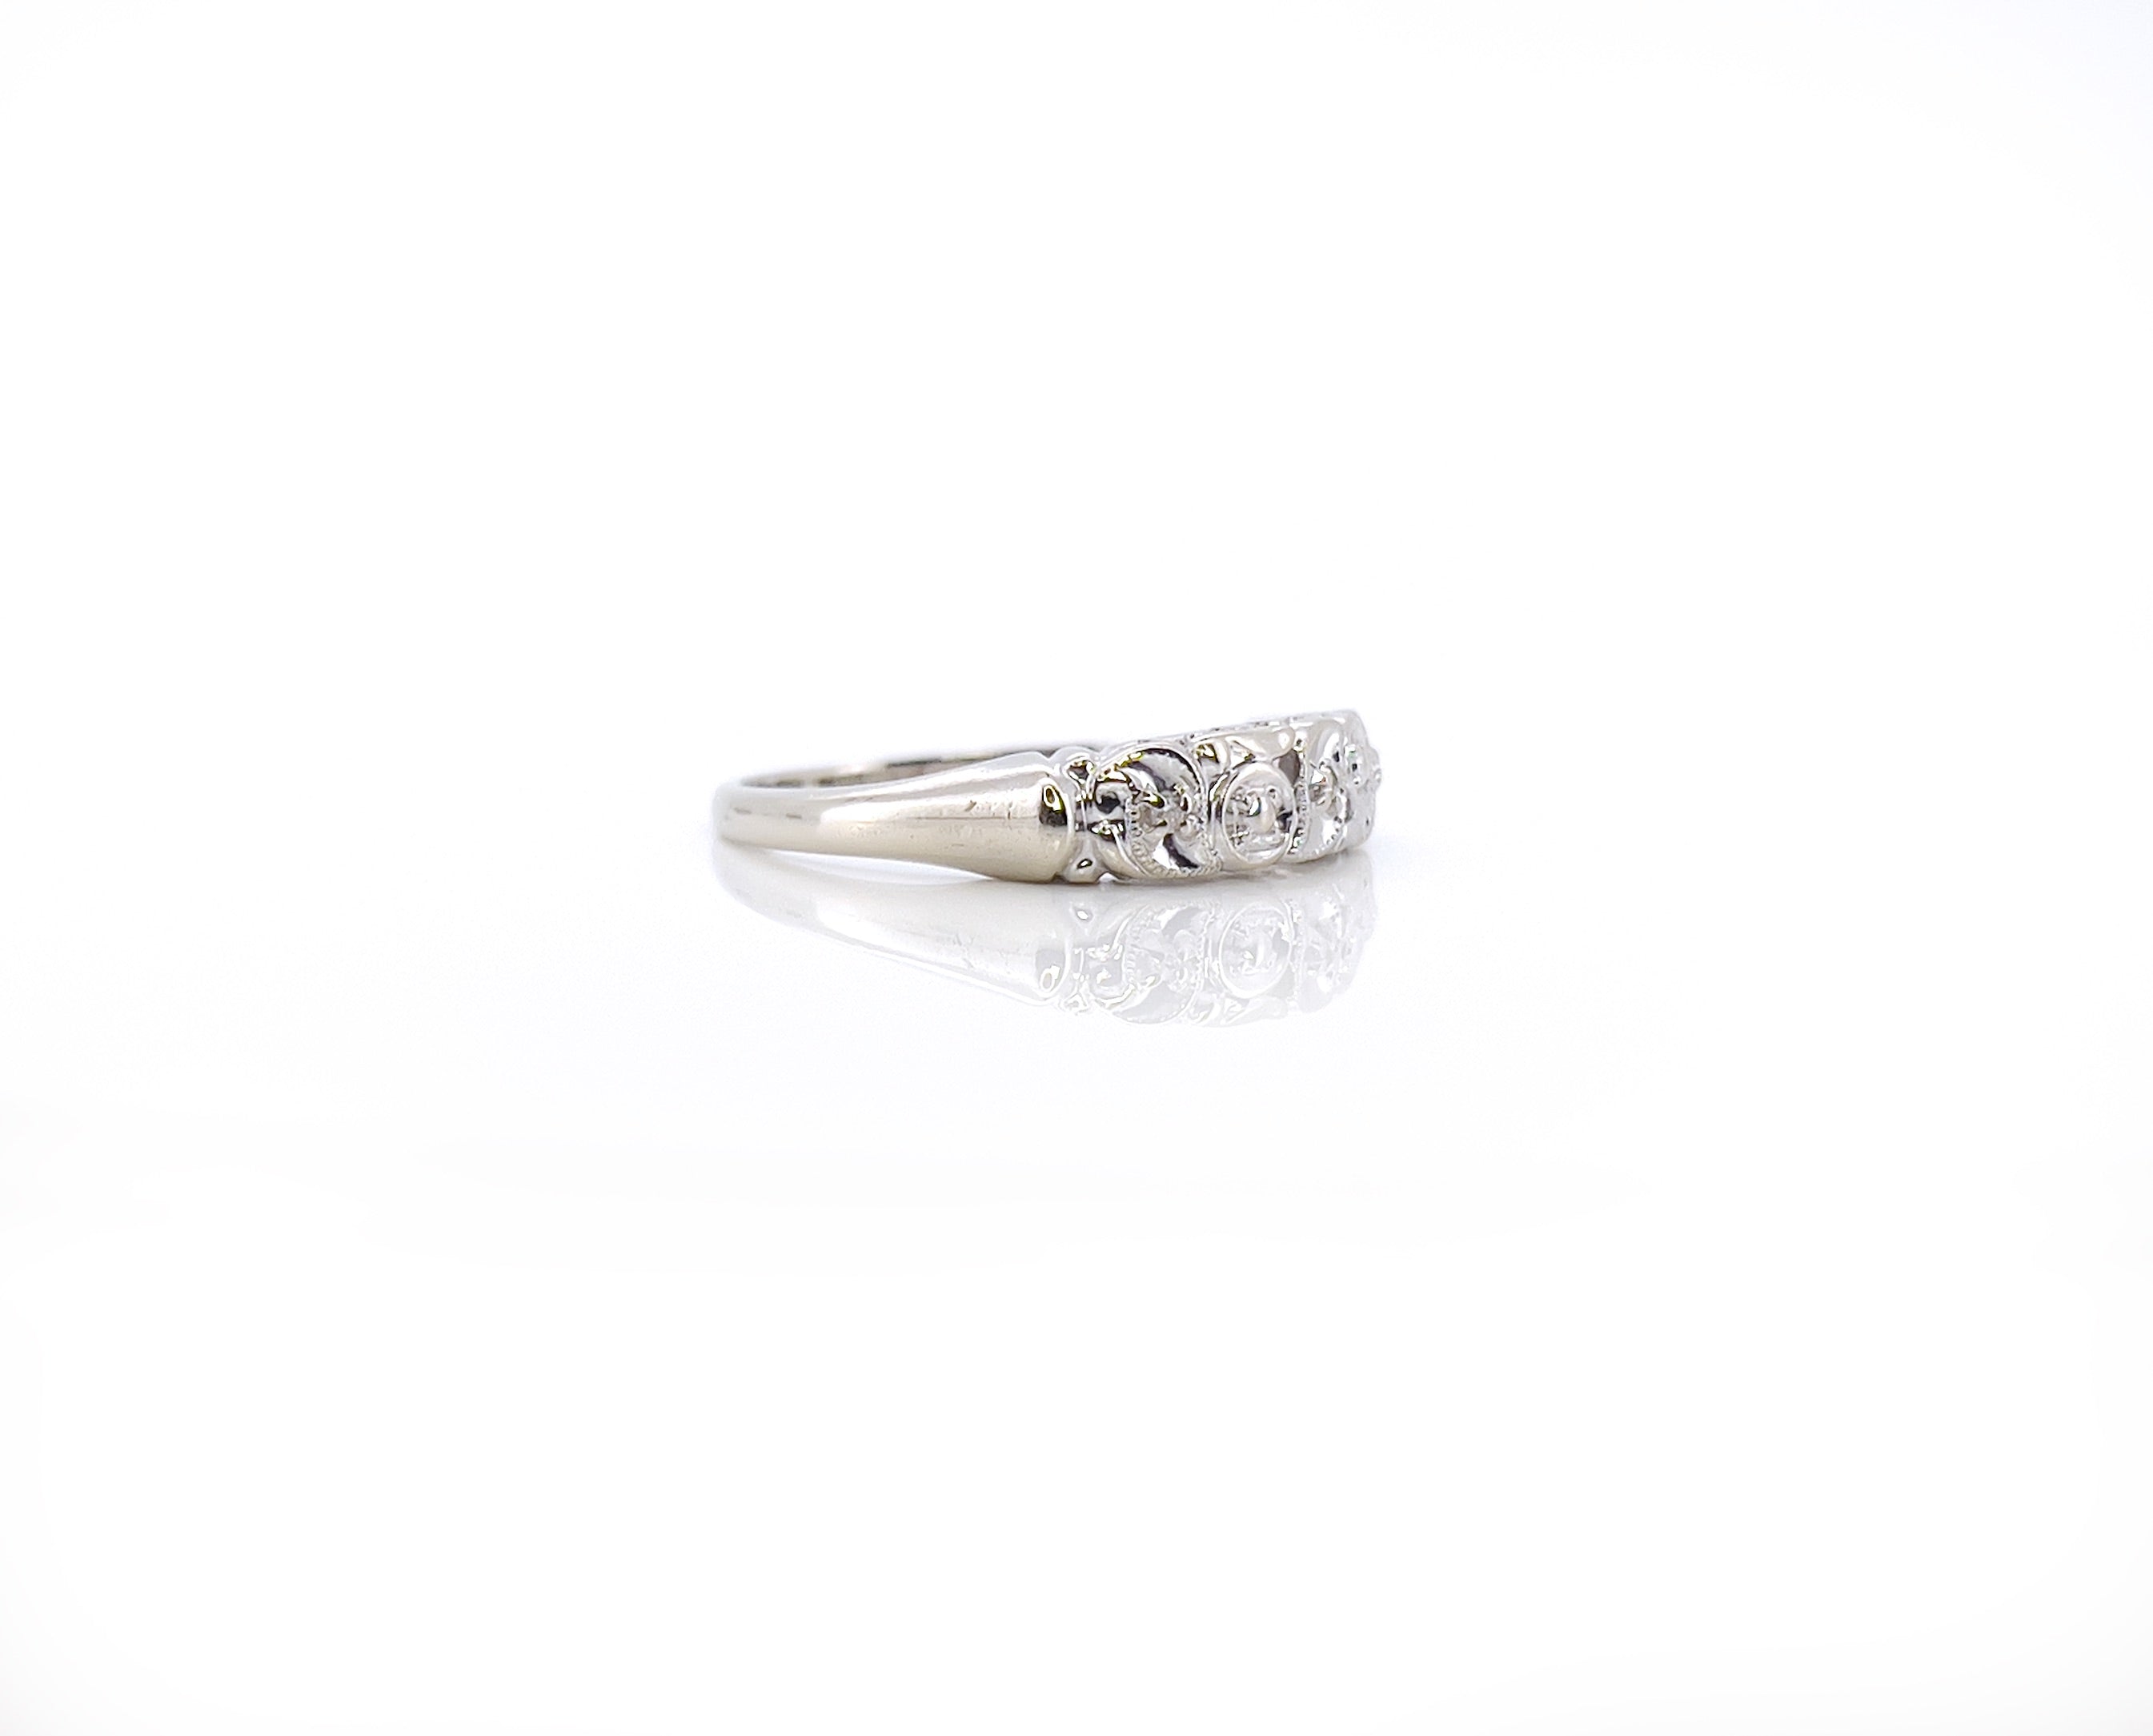 Vintage White Gold Single Cut Diamond Ring, Size 6.5